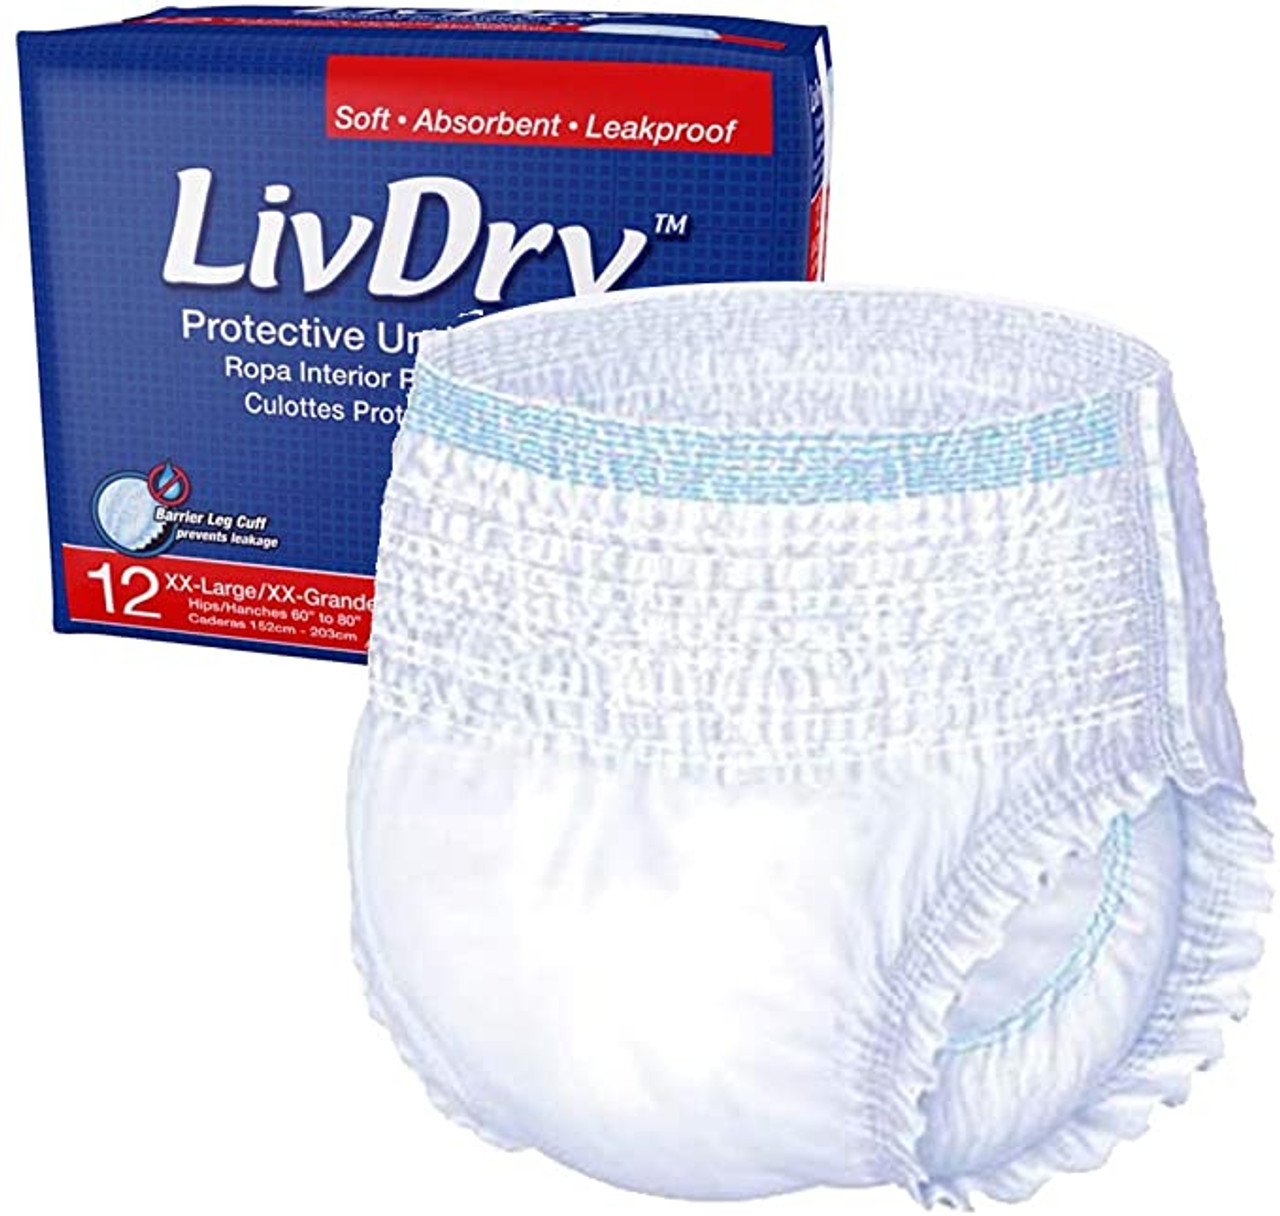 StayDry Ultra Adult Pull-Up Underwear